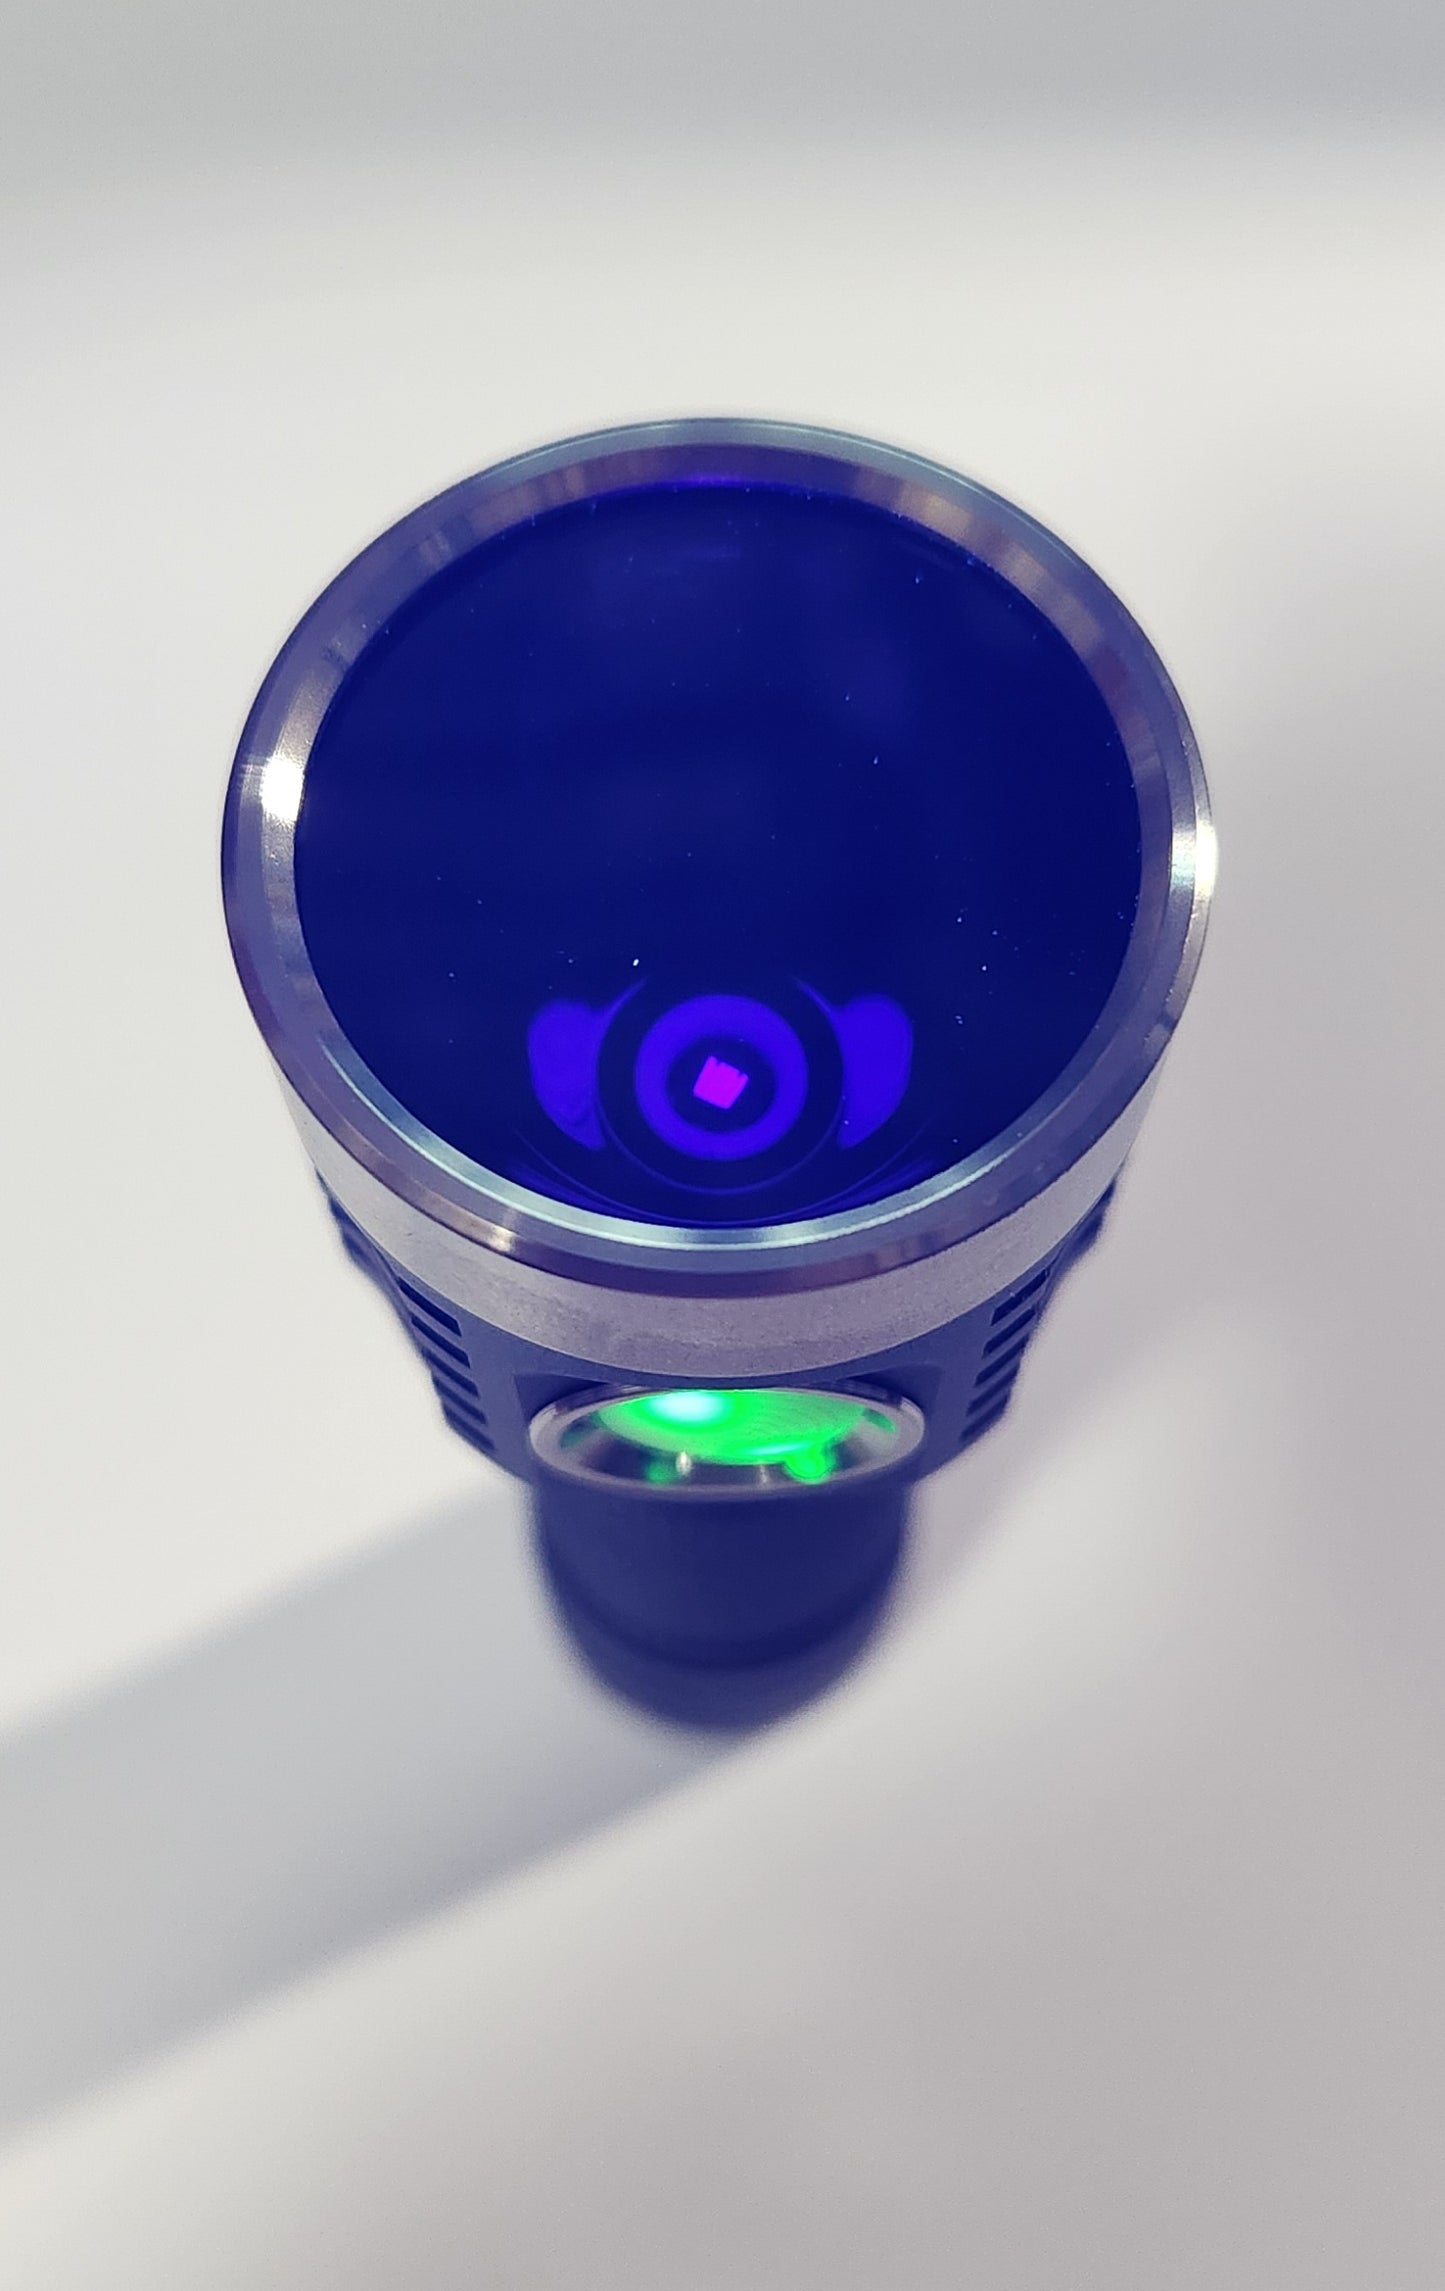 Emisar D1K 5W UV 365nm UV Flashlight